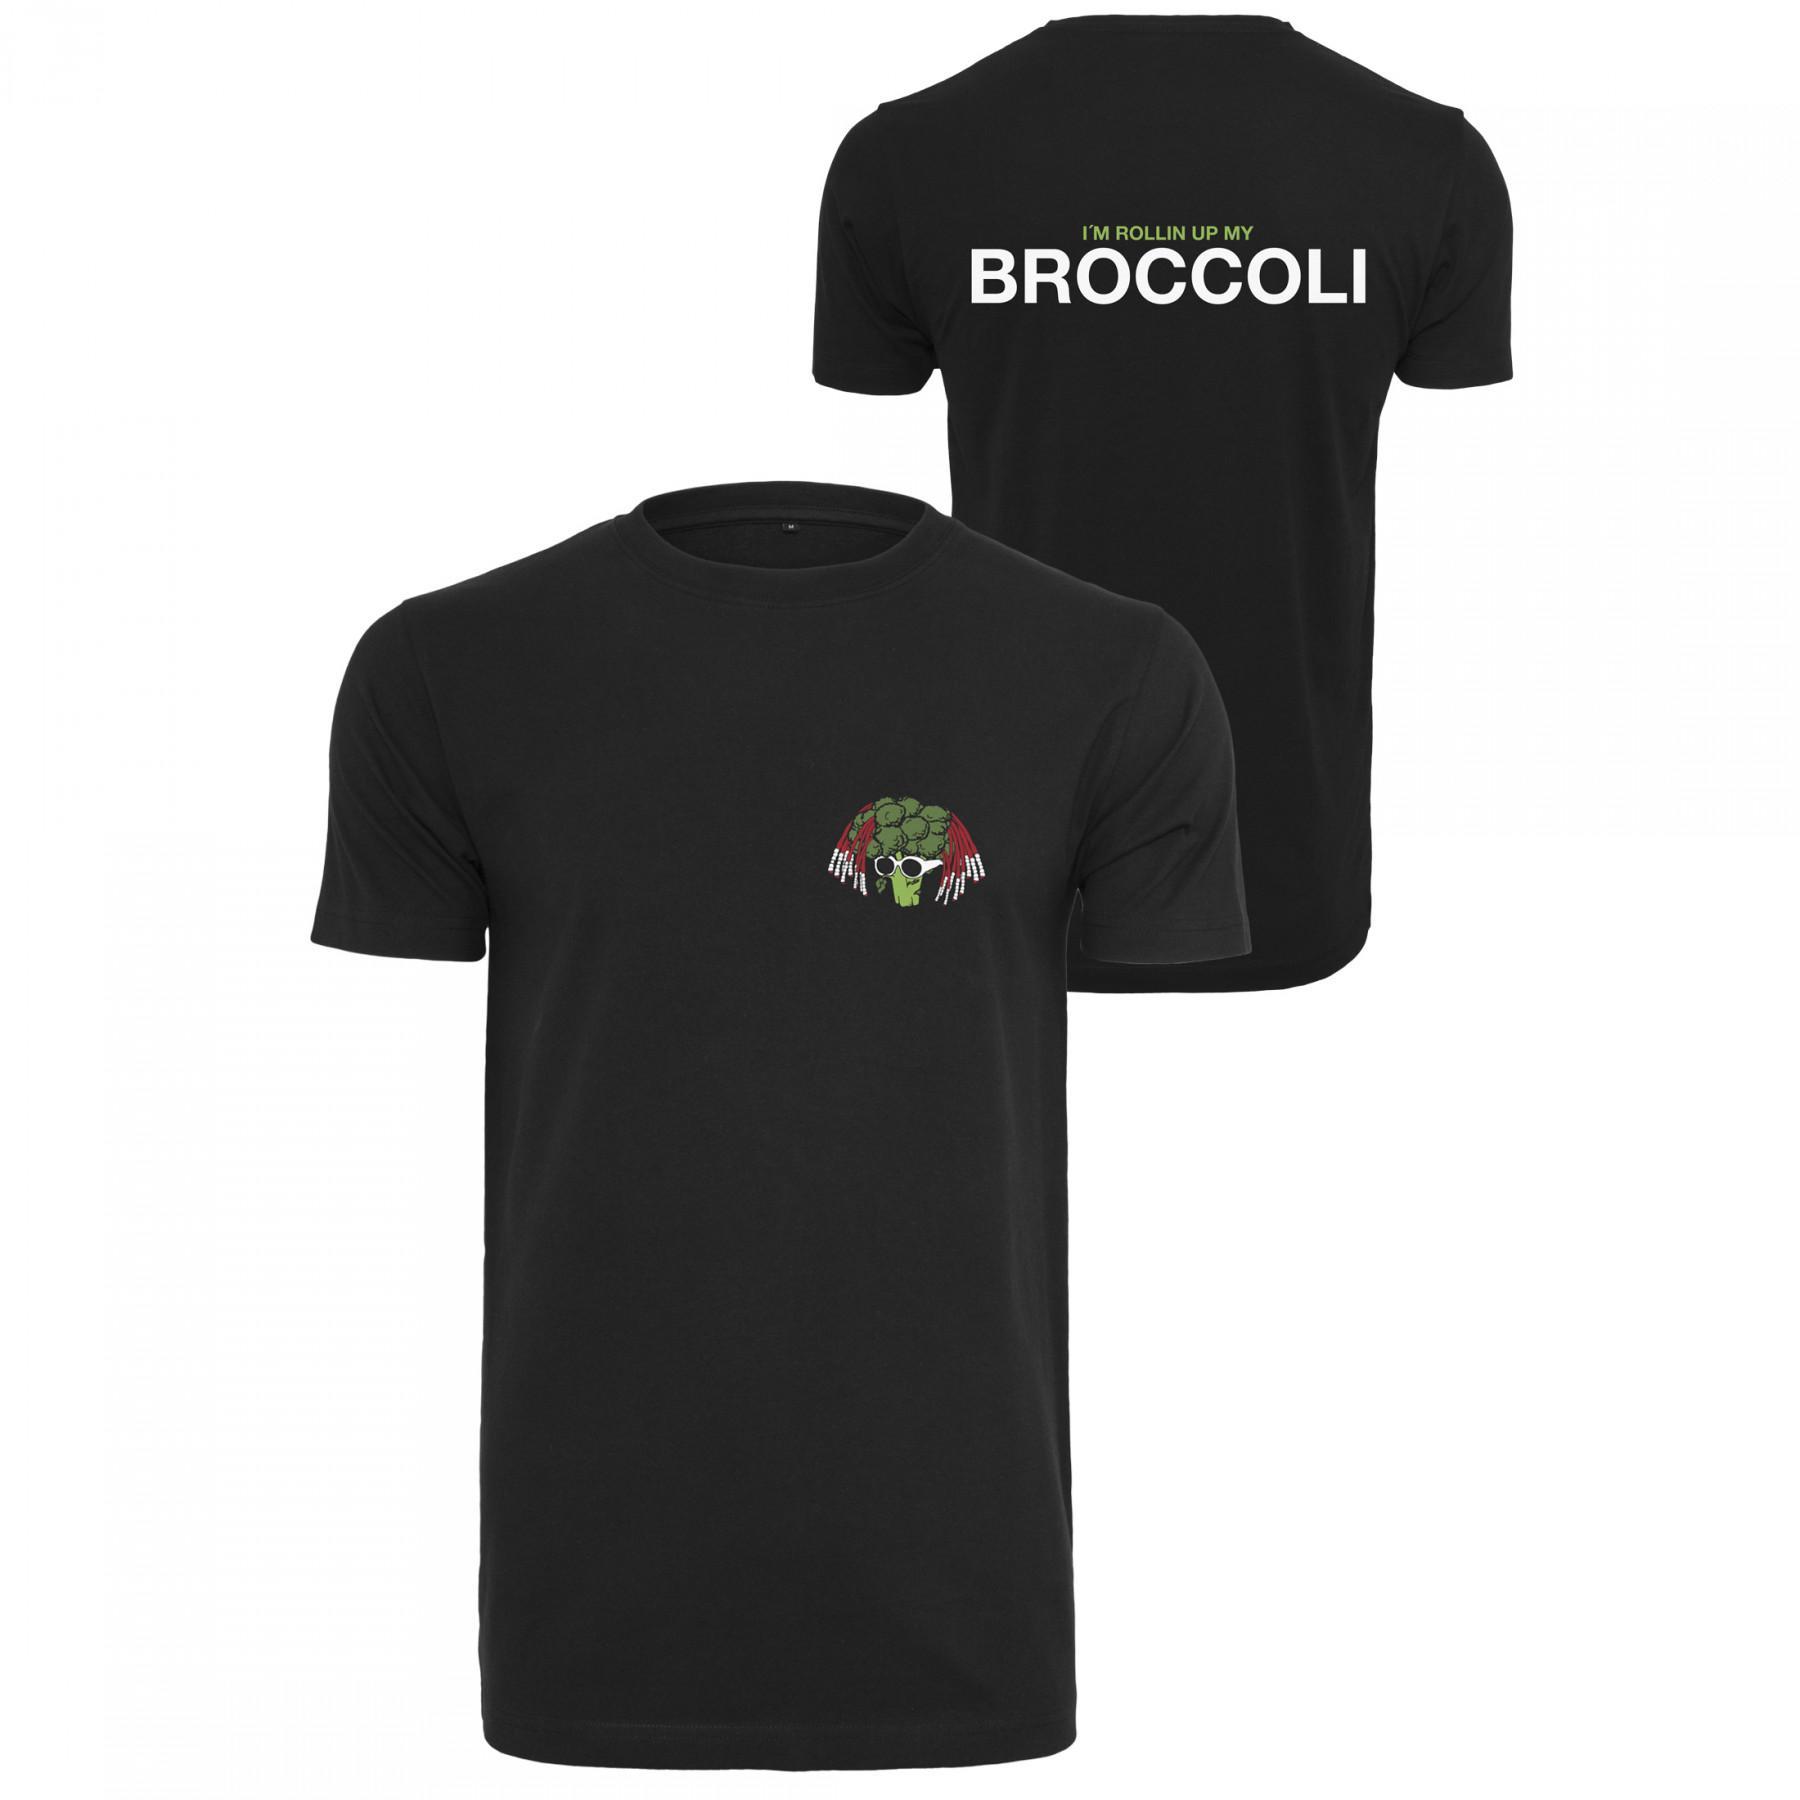 T-shirt Mister Tee broccoli